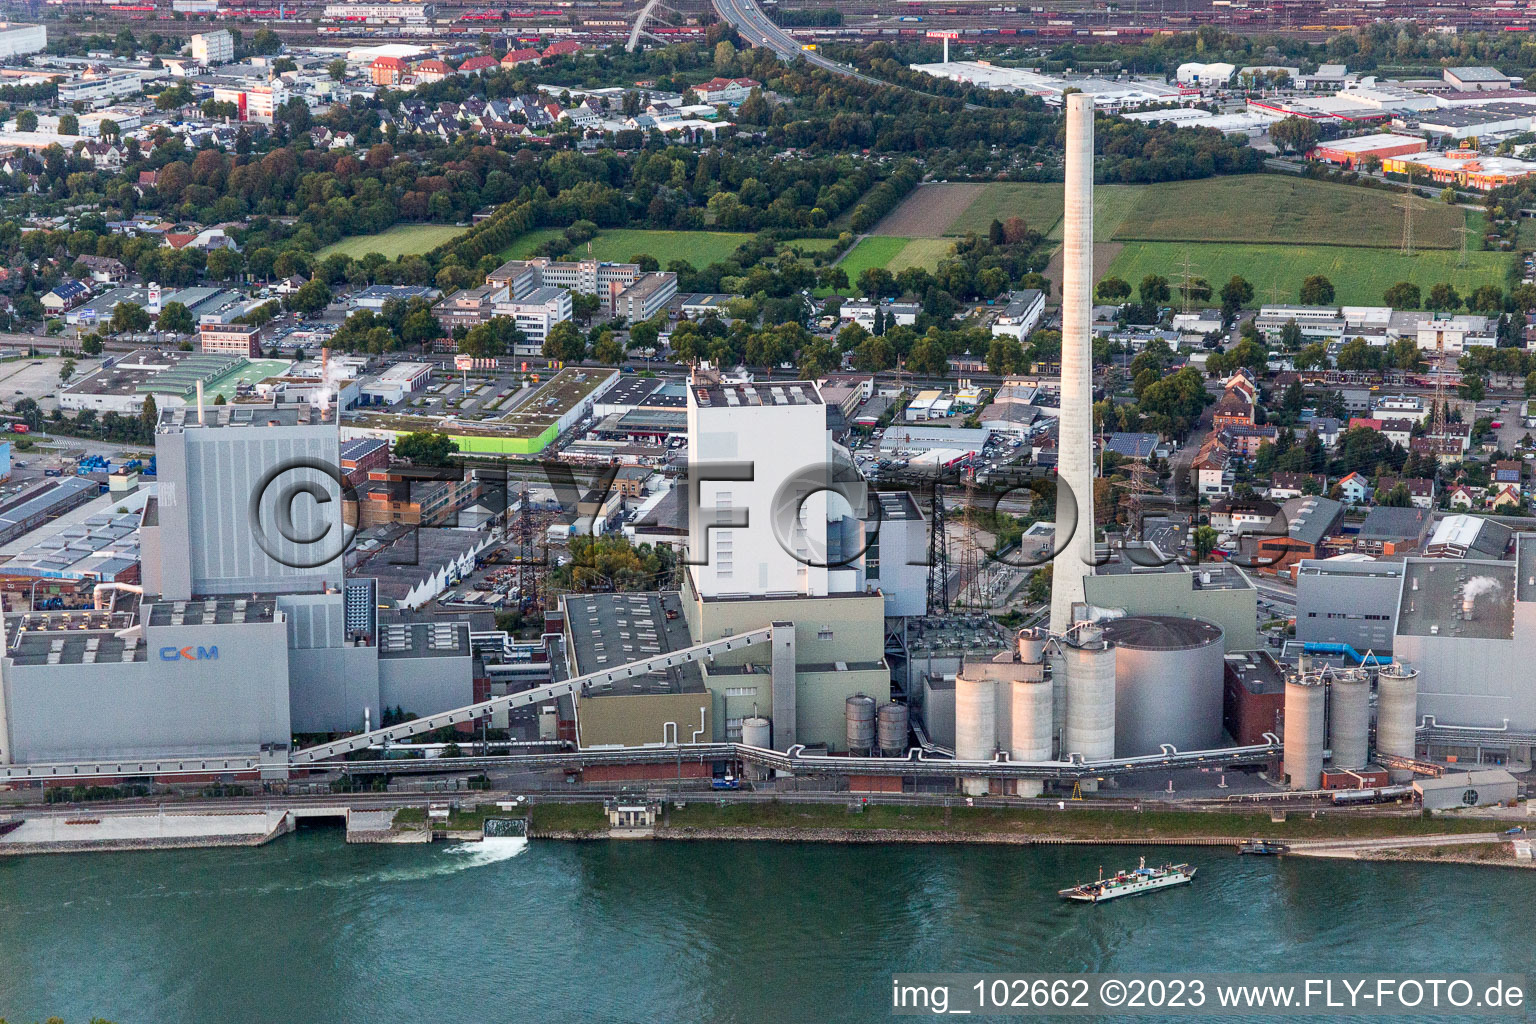 Aerial view of Large power plant Mannheim on the Rhine near Neckarau in the district Rheinau in Mannheim in the state Baden-Wuerttemberg, Germany